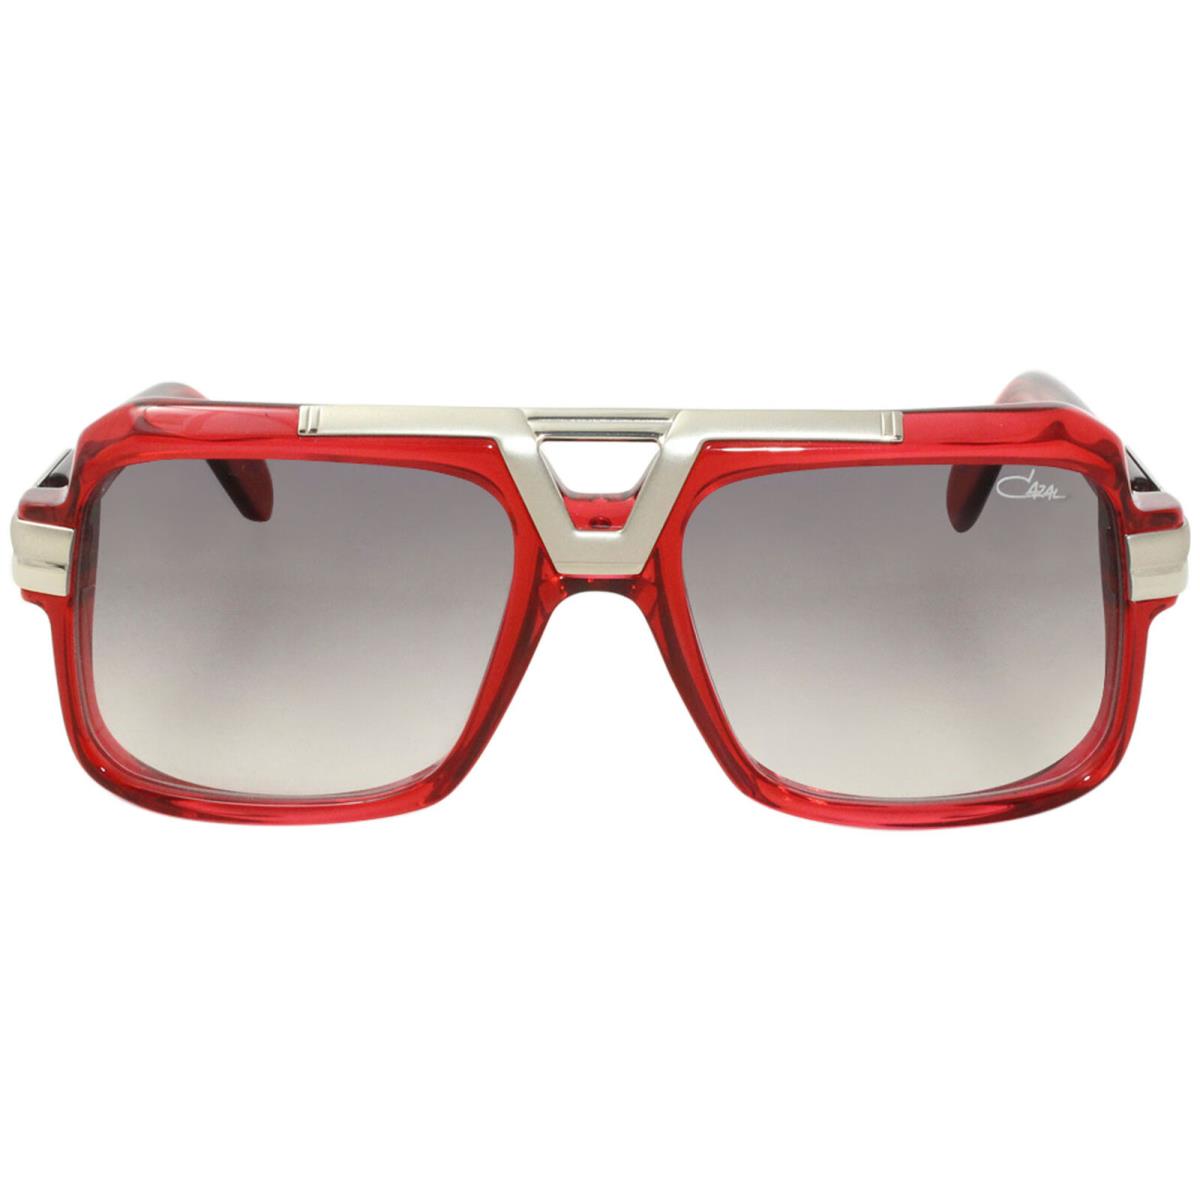 Cazal Legends 664 004 Sunglasses Men`s Red-silver/grey Gradient Lenses 56mm